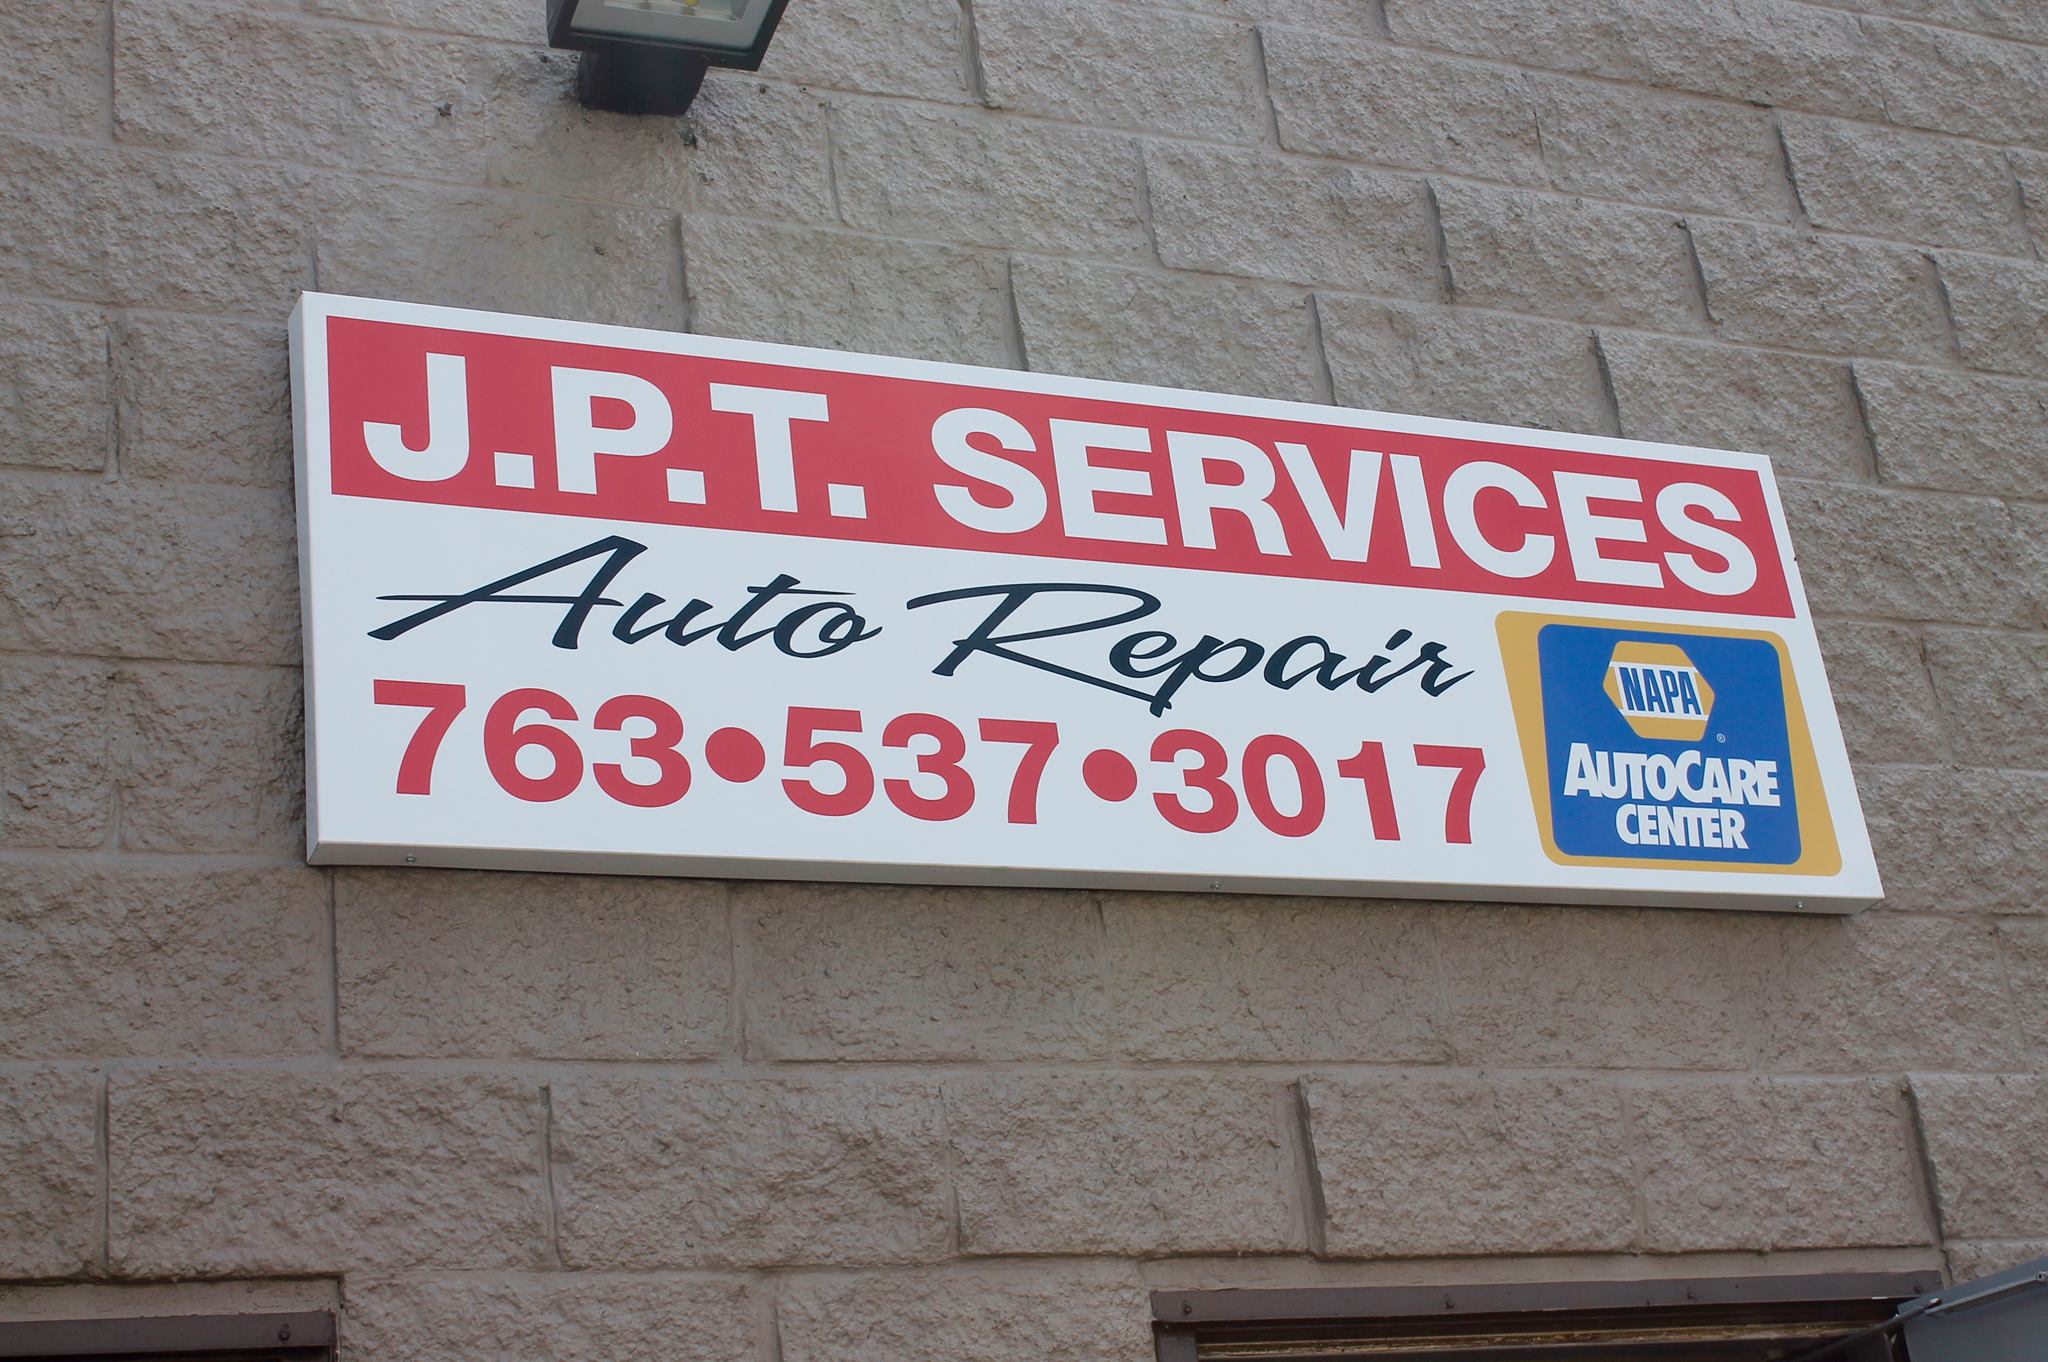 JPT Services